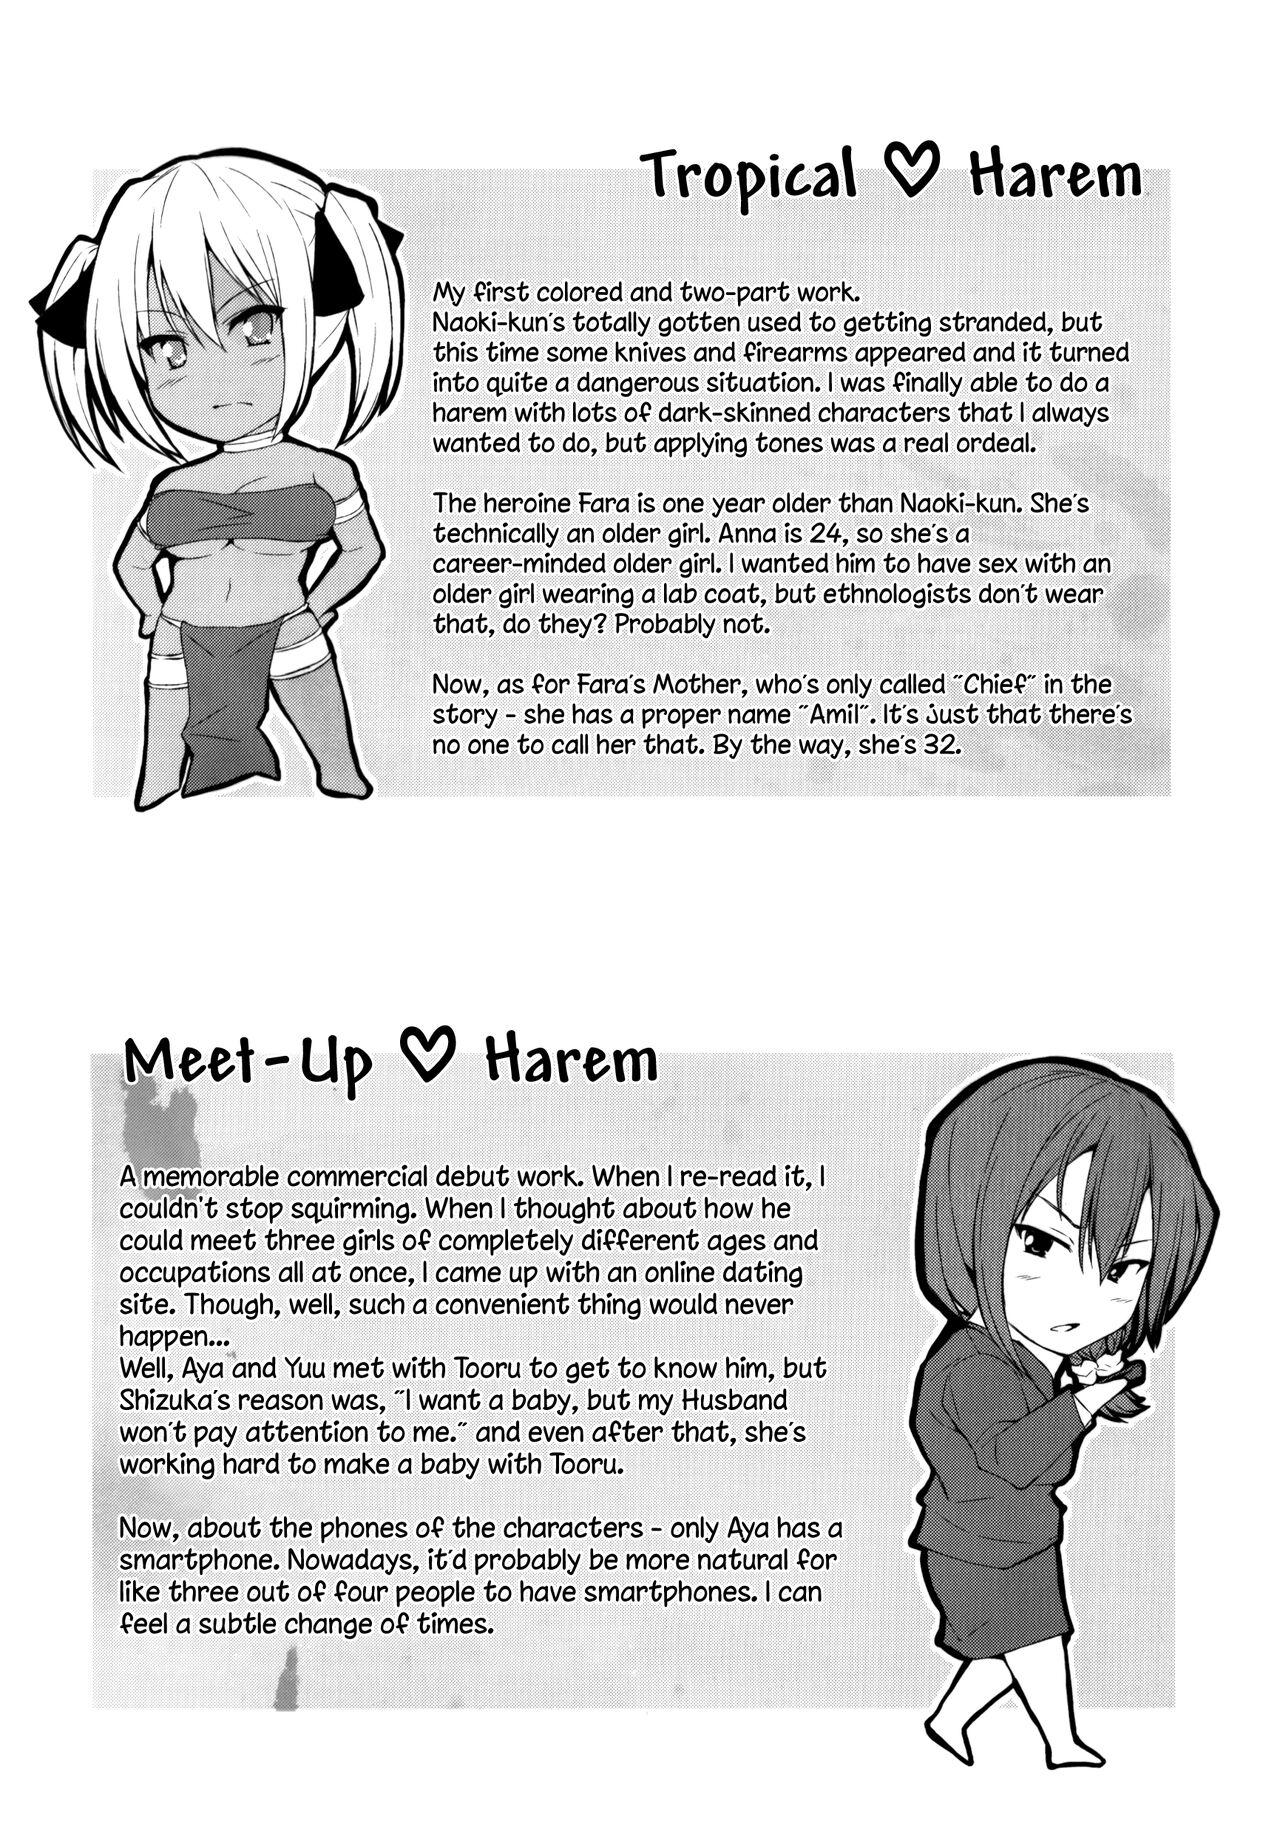 Female Boy Meets Harem Woman - Page 3